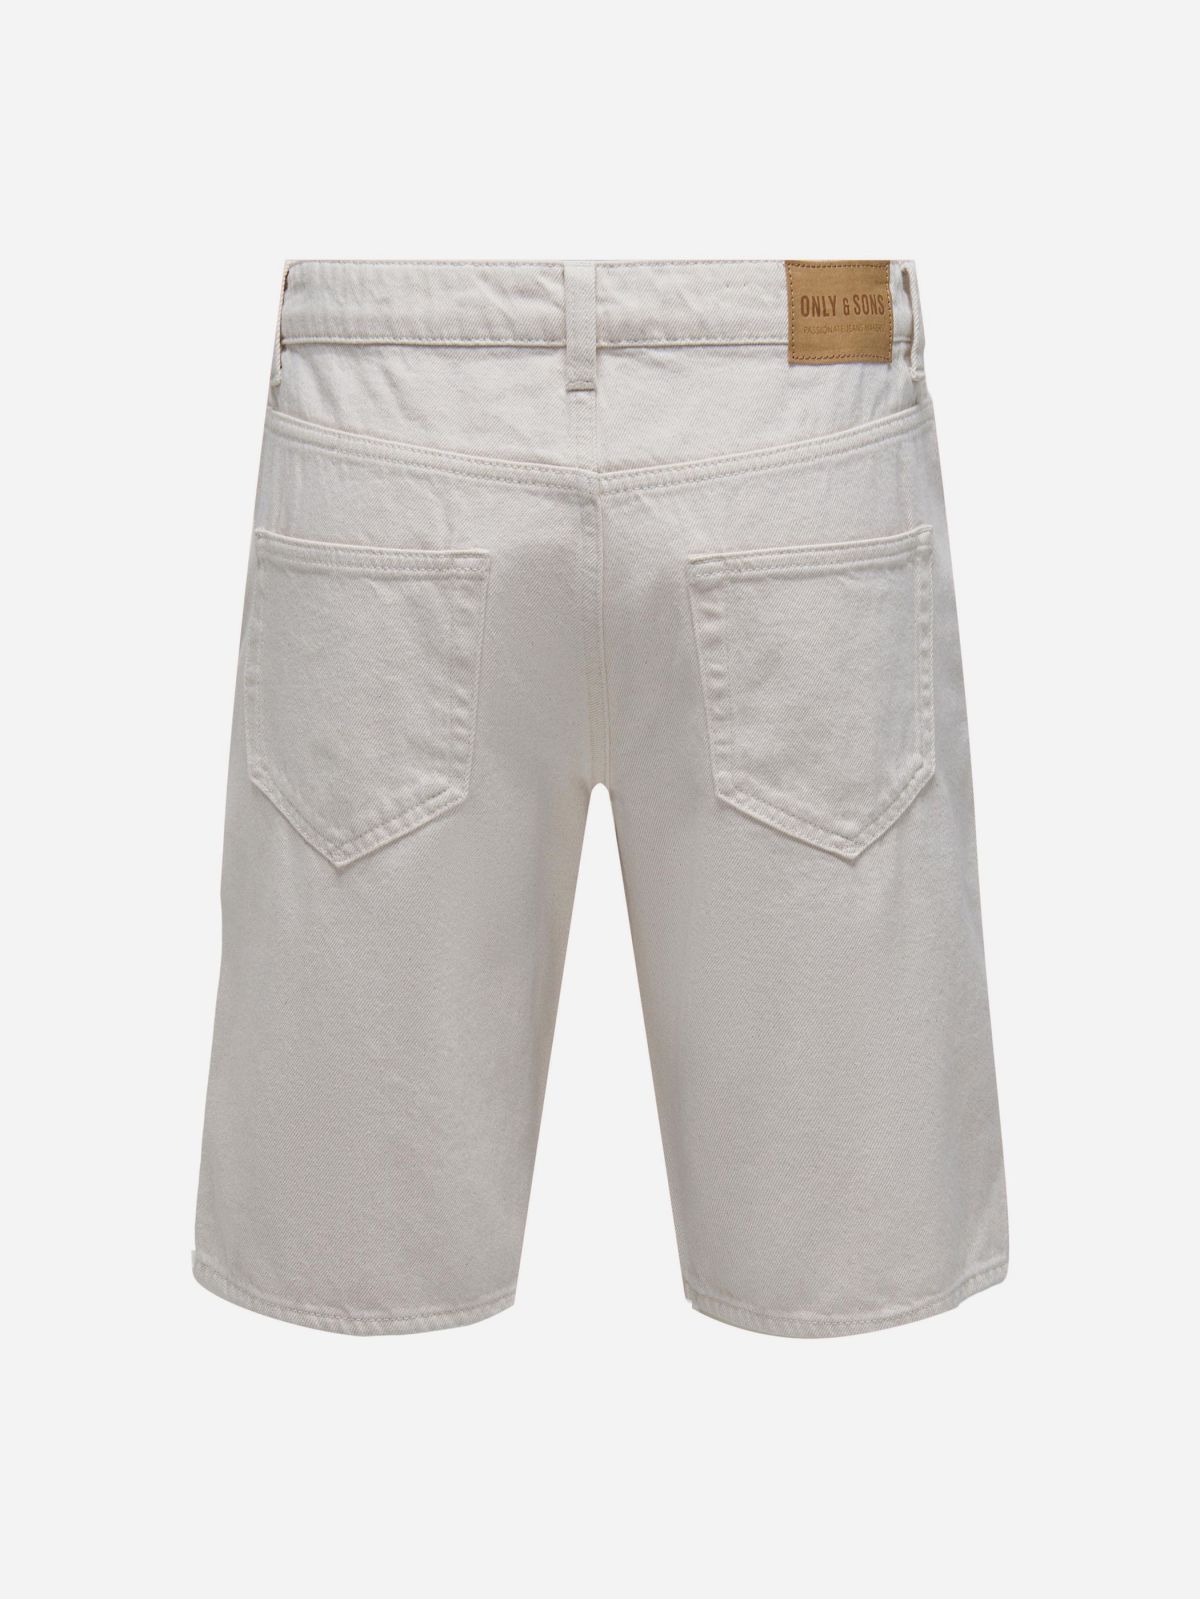  ג'ינס קצר בגזרה ישרה / גברים של ONLY & SONS